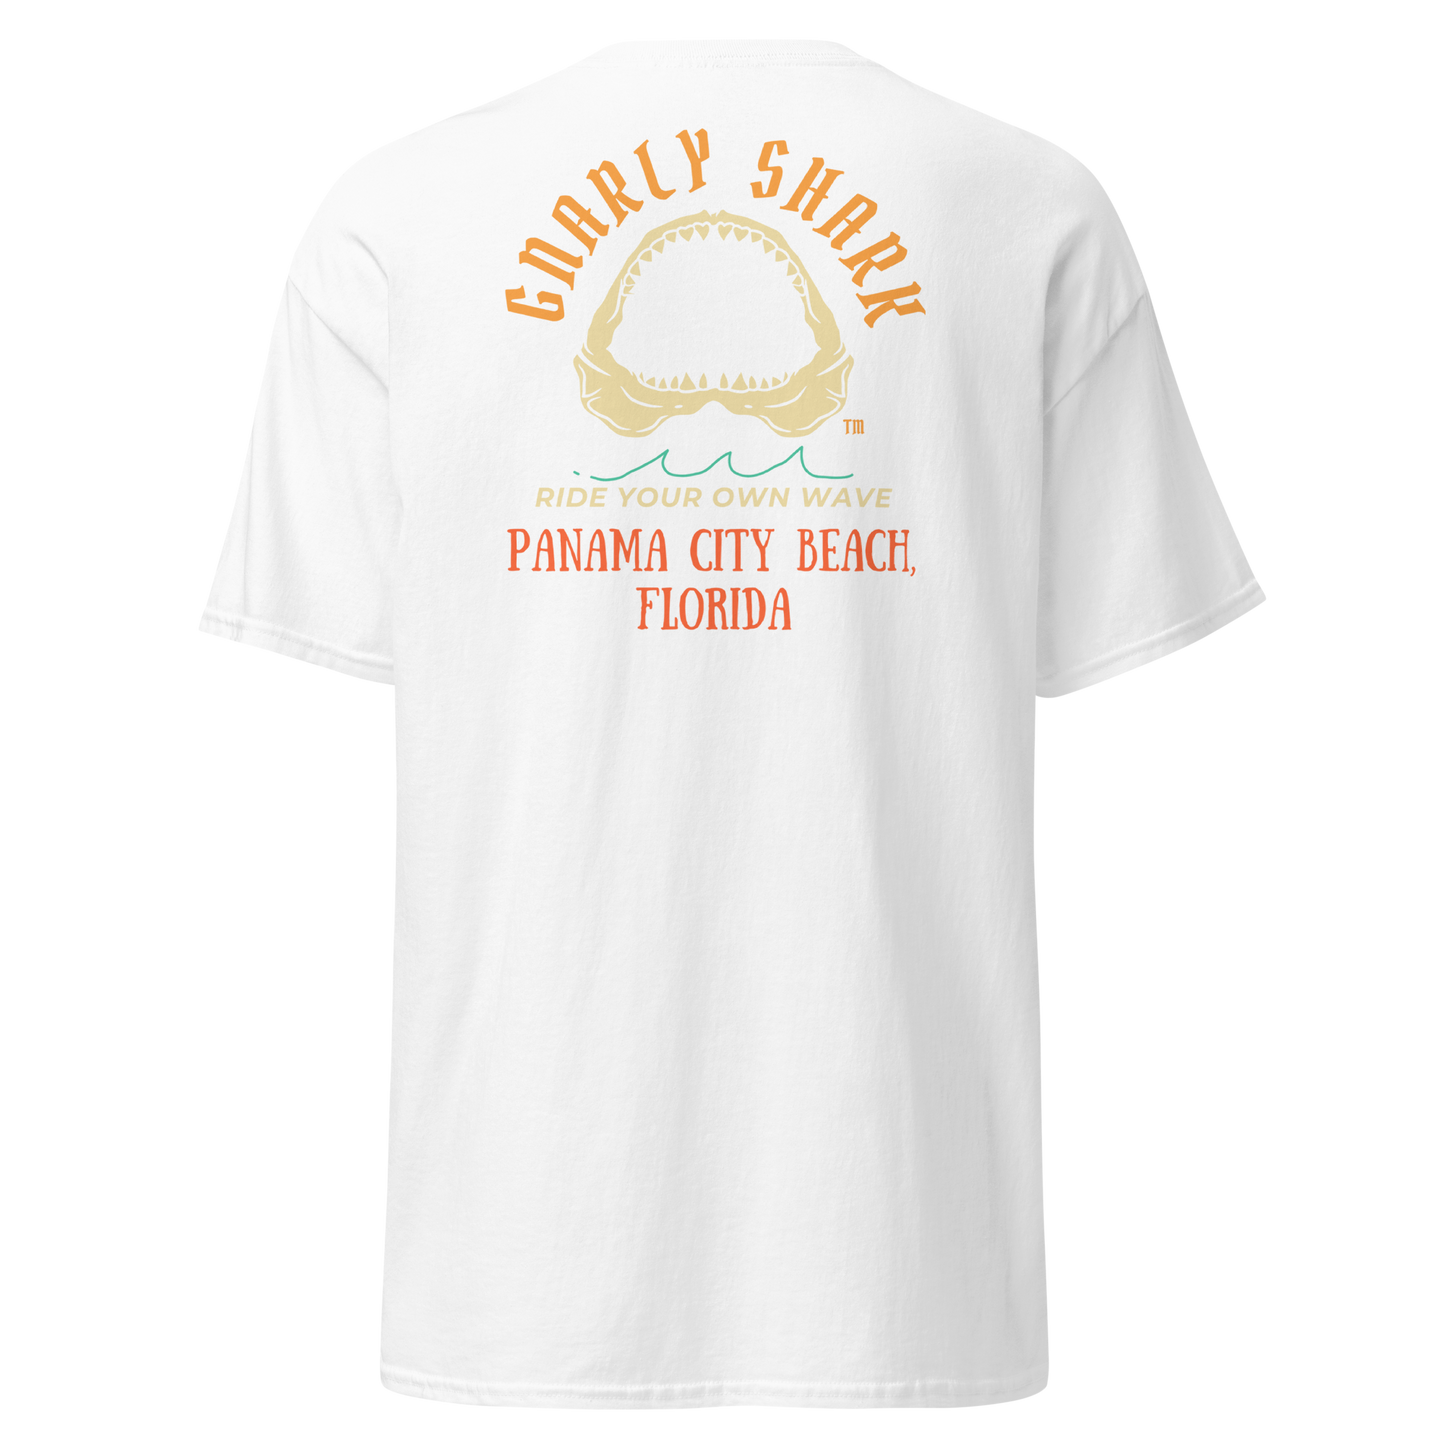 Gnarly Shark Panama City Beach Florida T-Shirt - Front / Back - Gildan classic 5000